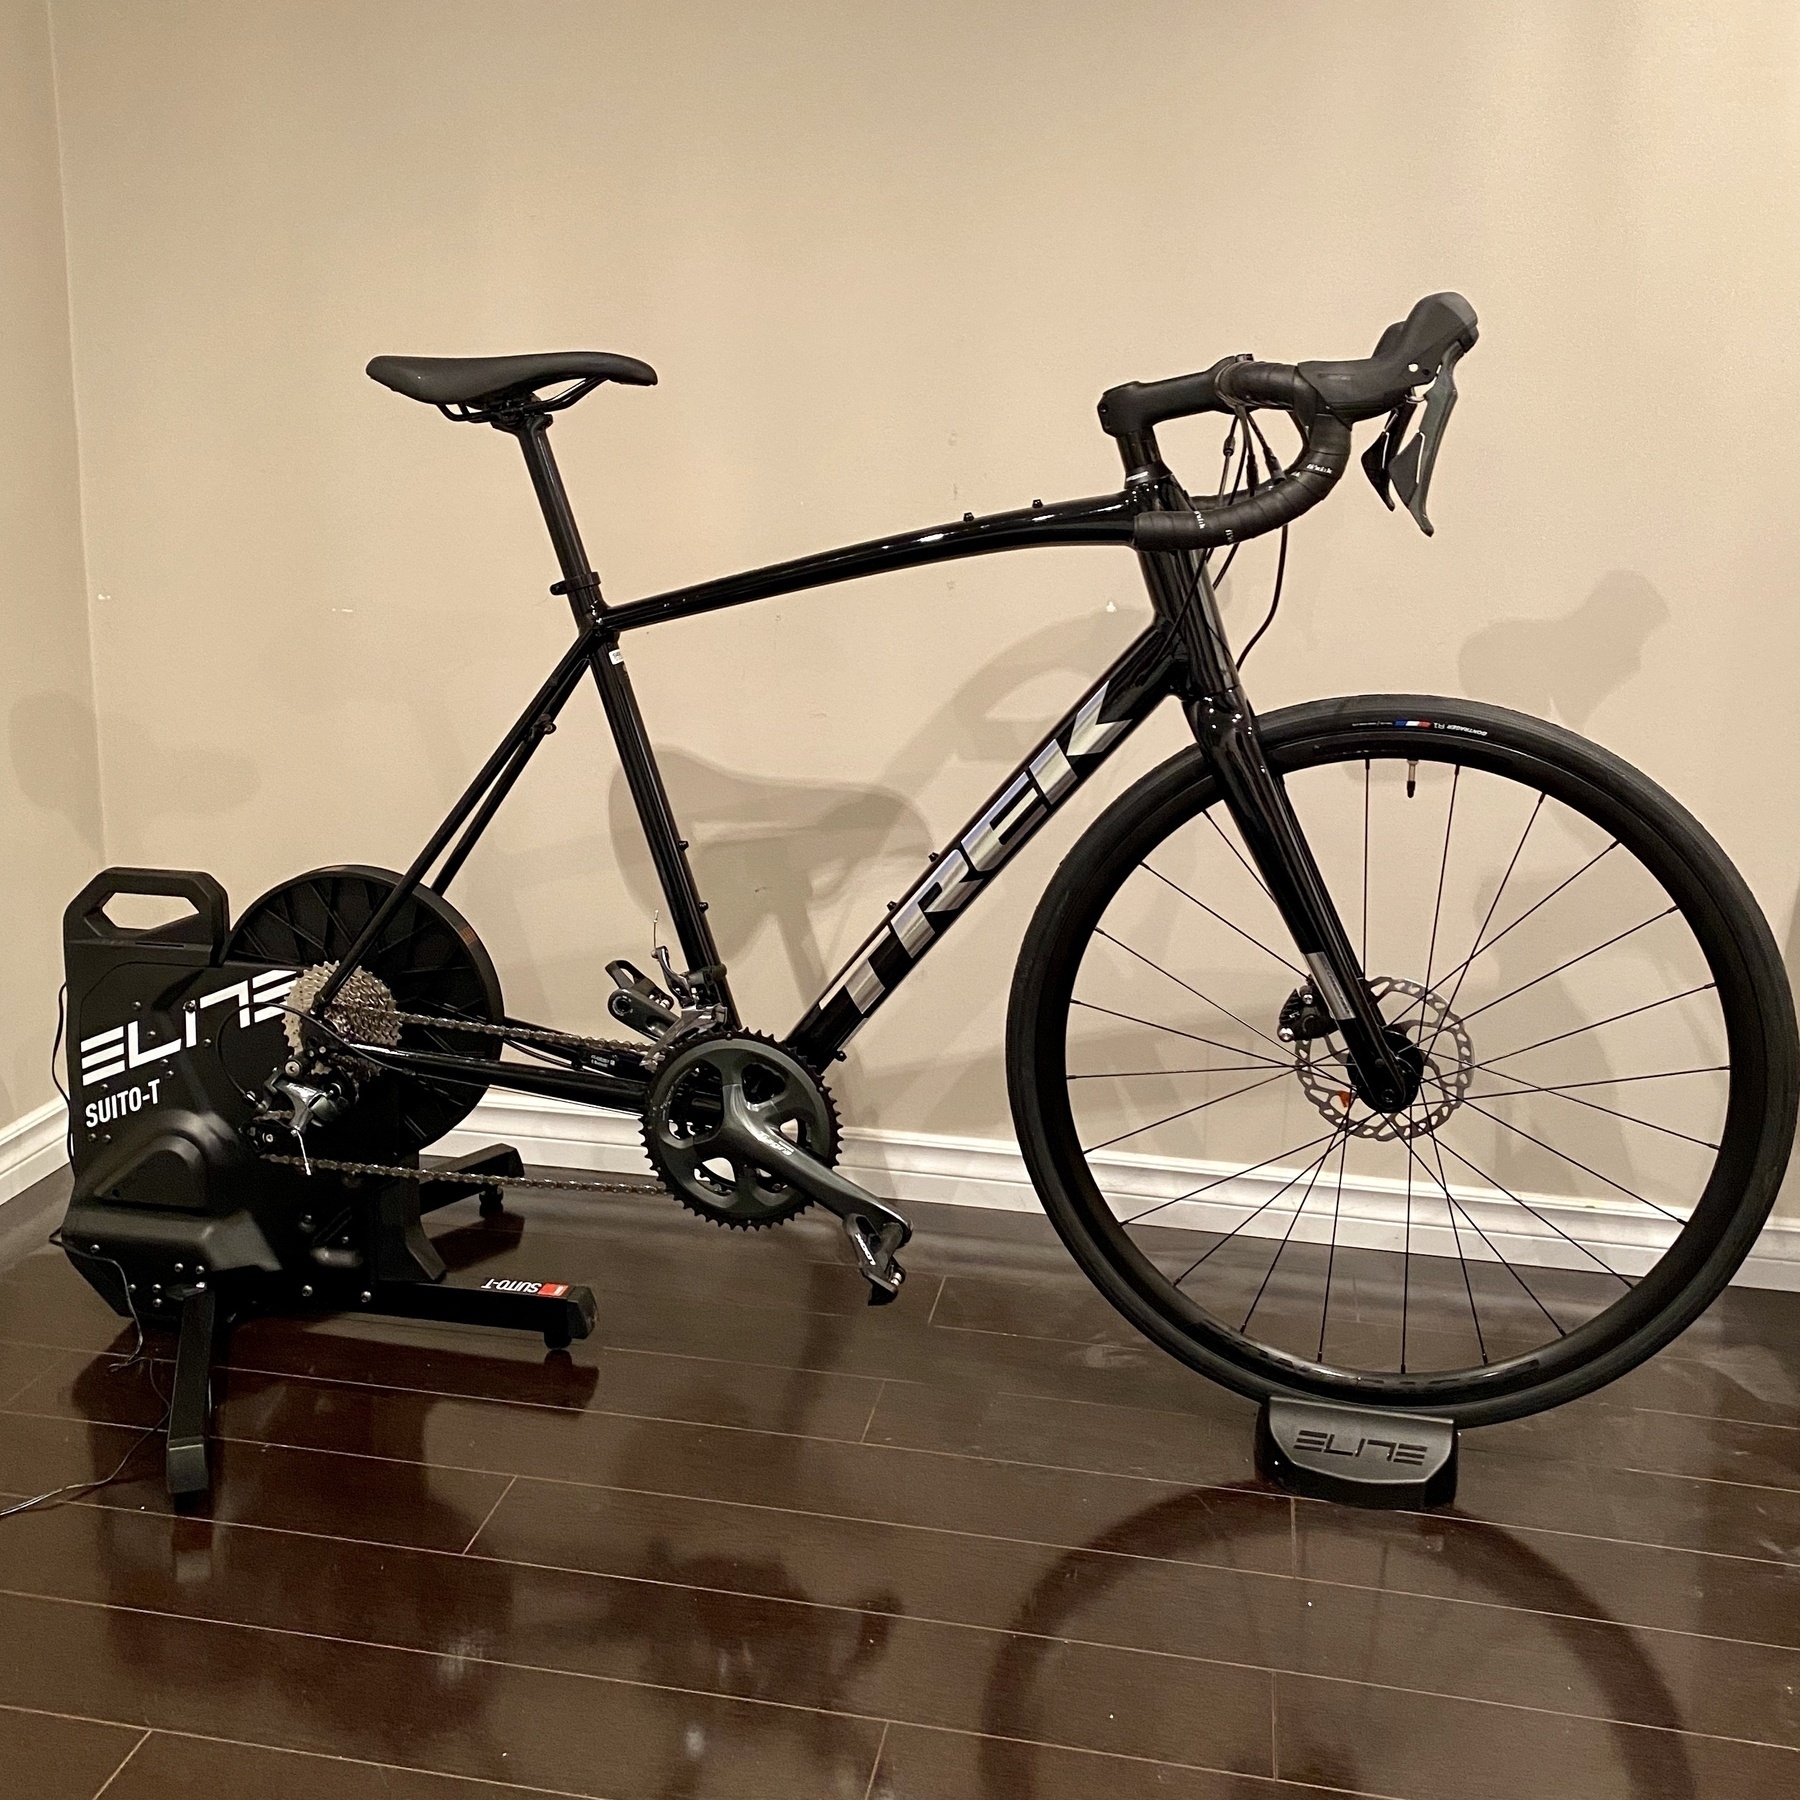 Indoor bike trainer setup